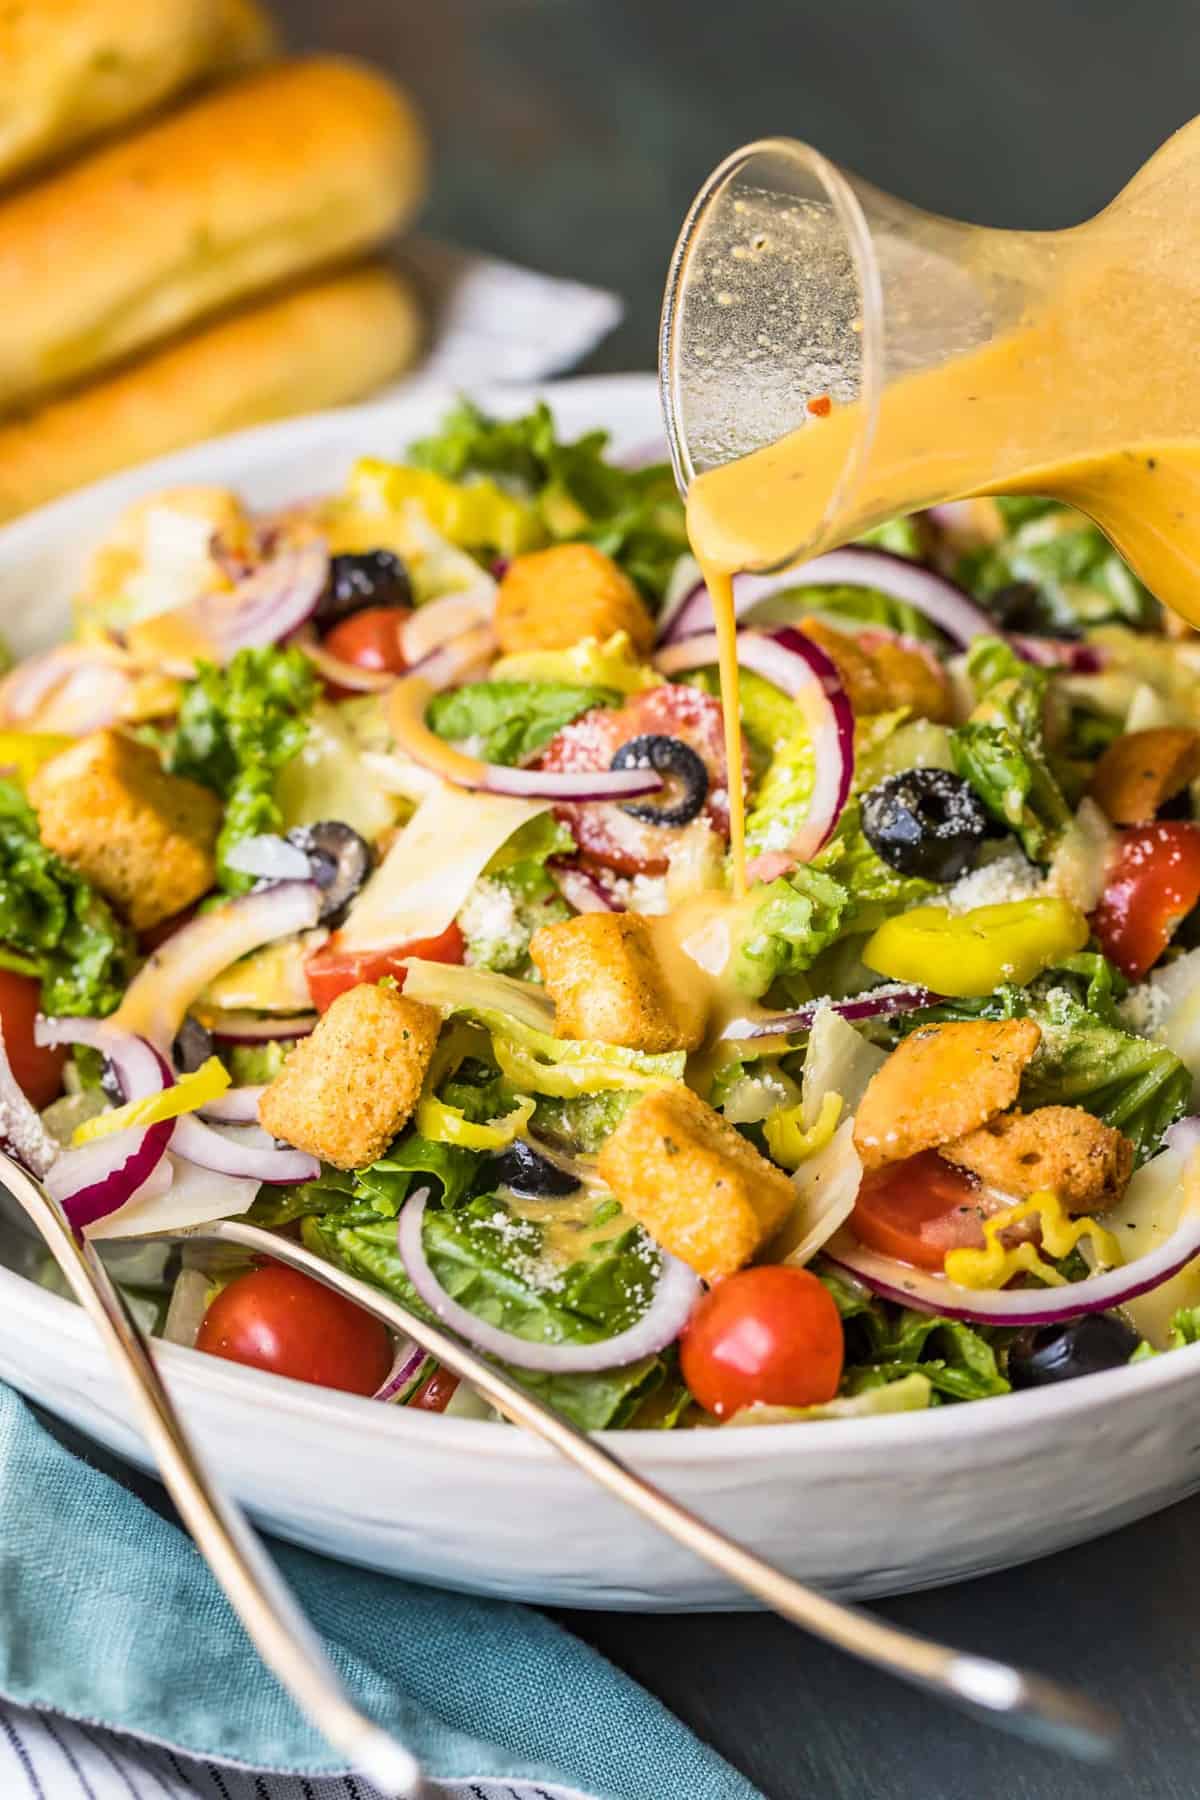 https://www.thecookierookie.com/wp-content/uploads/2019/09/olive-garden-salad-with-copycat-dressing-7-of-8.jpg